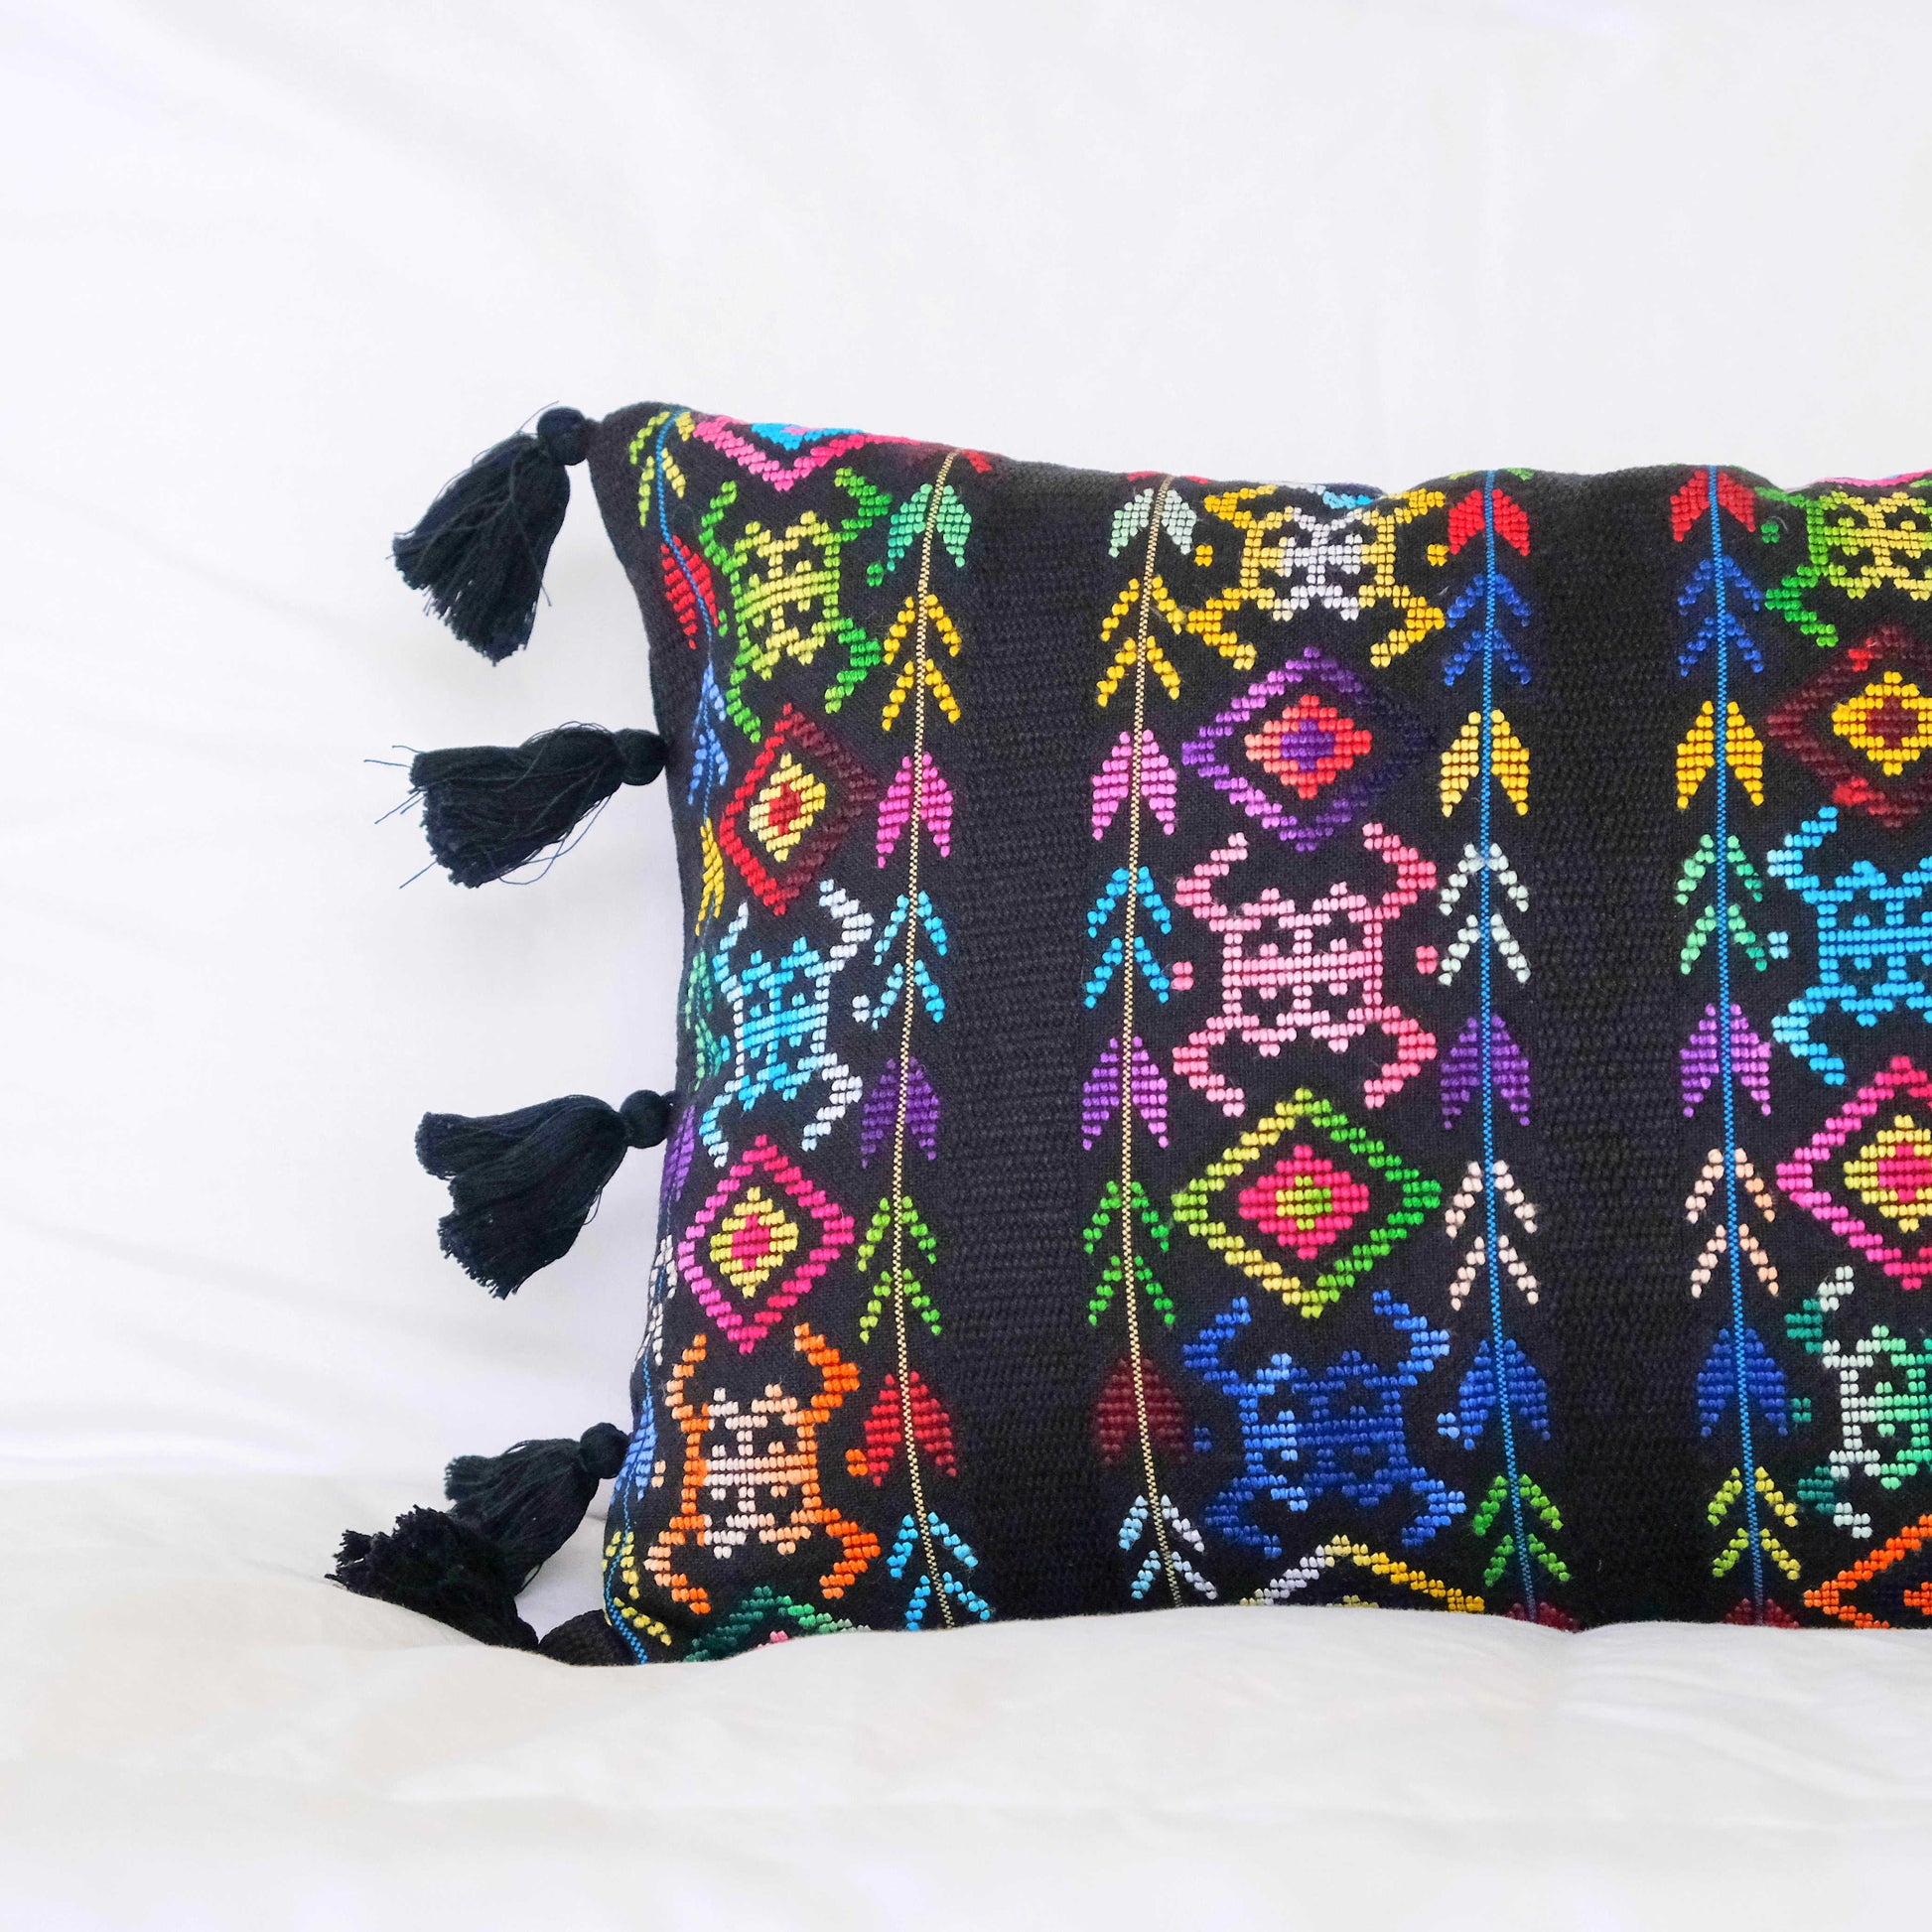 Oversized Guatemalan Lumbar Pillow - Sumiye Co